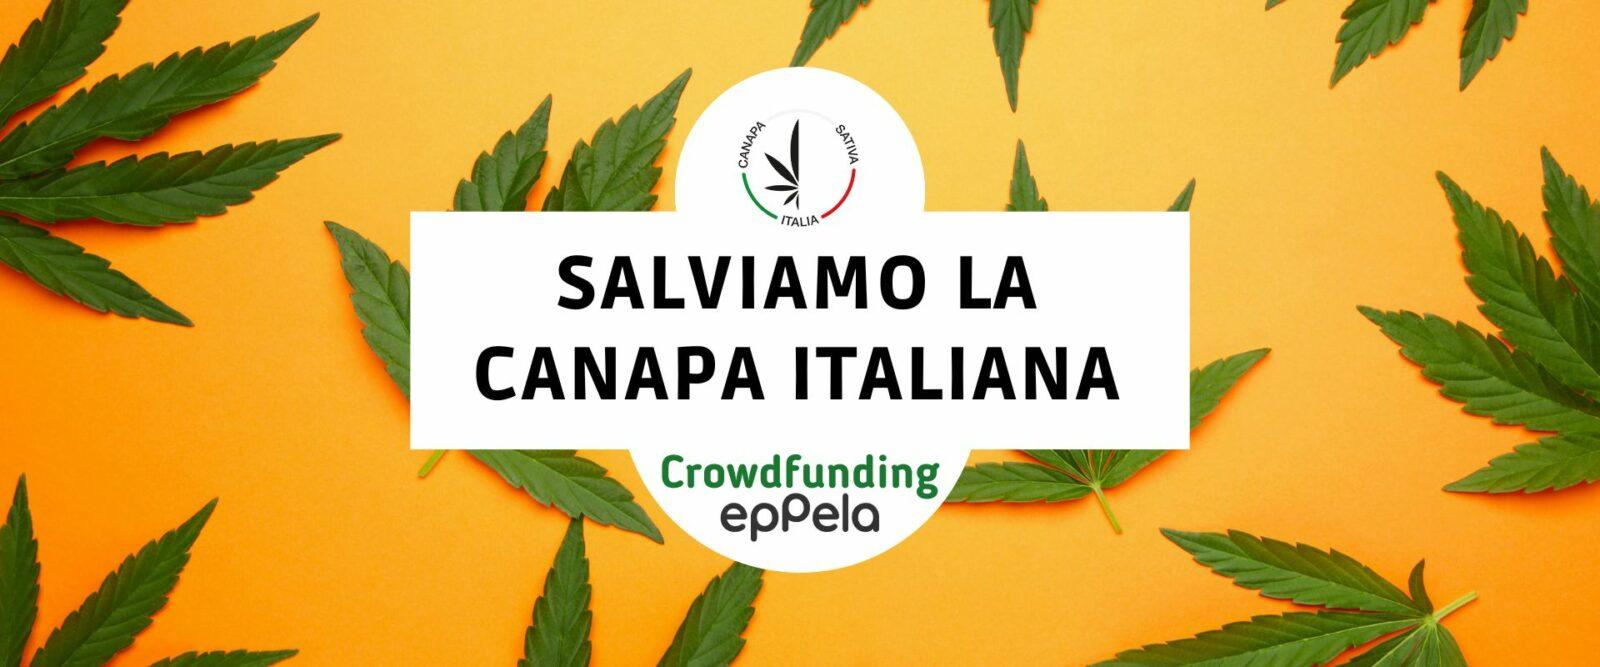 SalviamoLaCanapaItaliana_CrowdfundingEppela